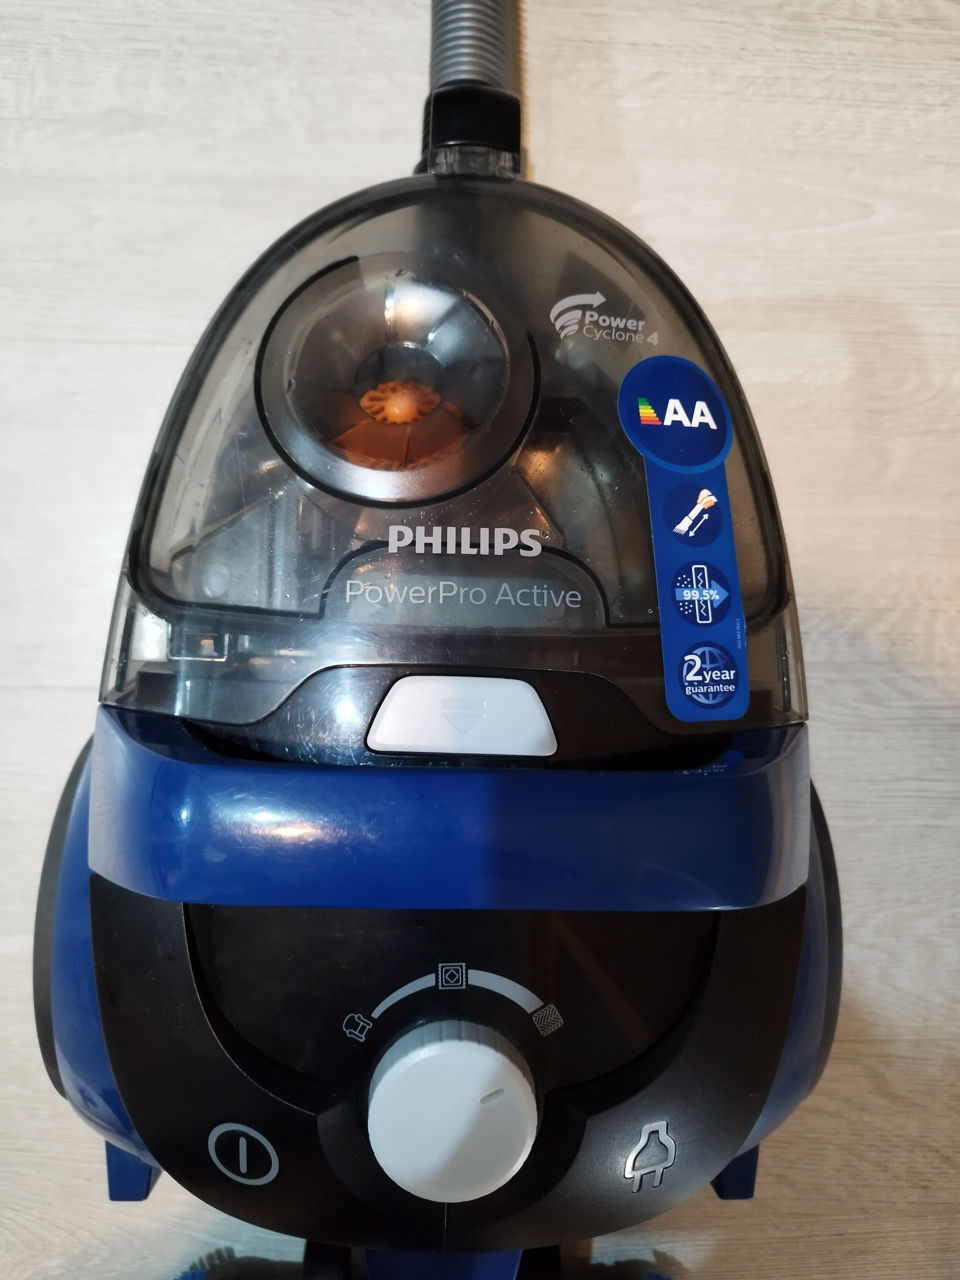 Europe fox Millimeter Aspirator Philips Power ProActive, AA